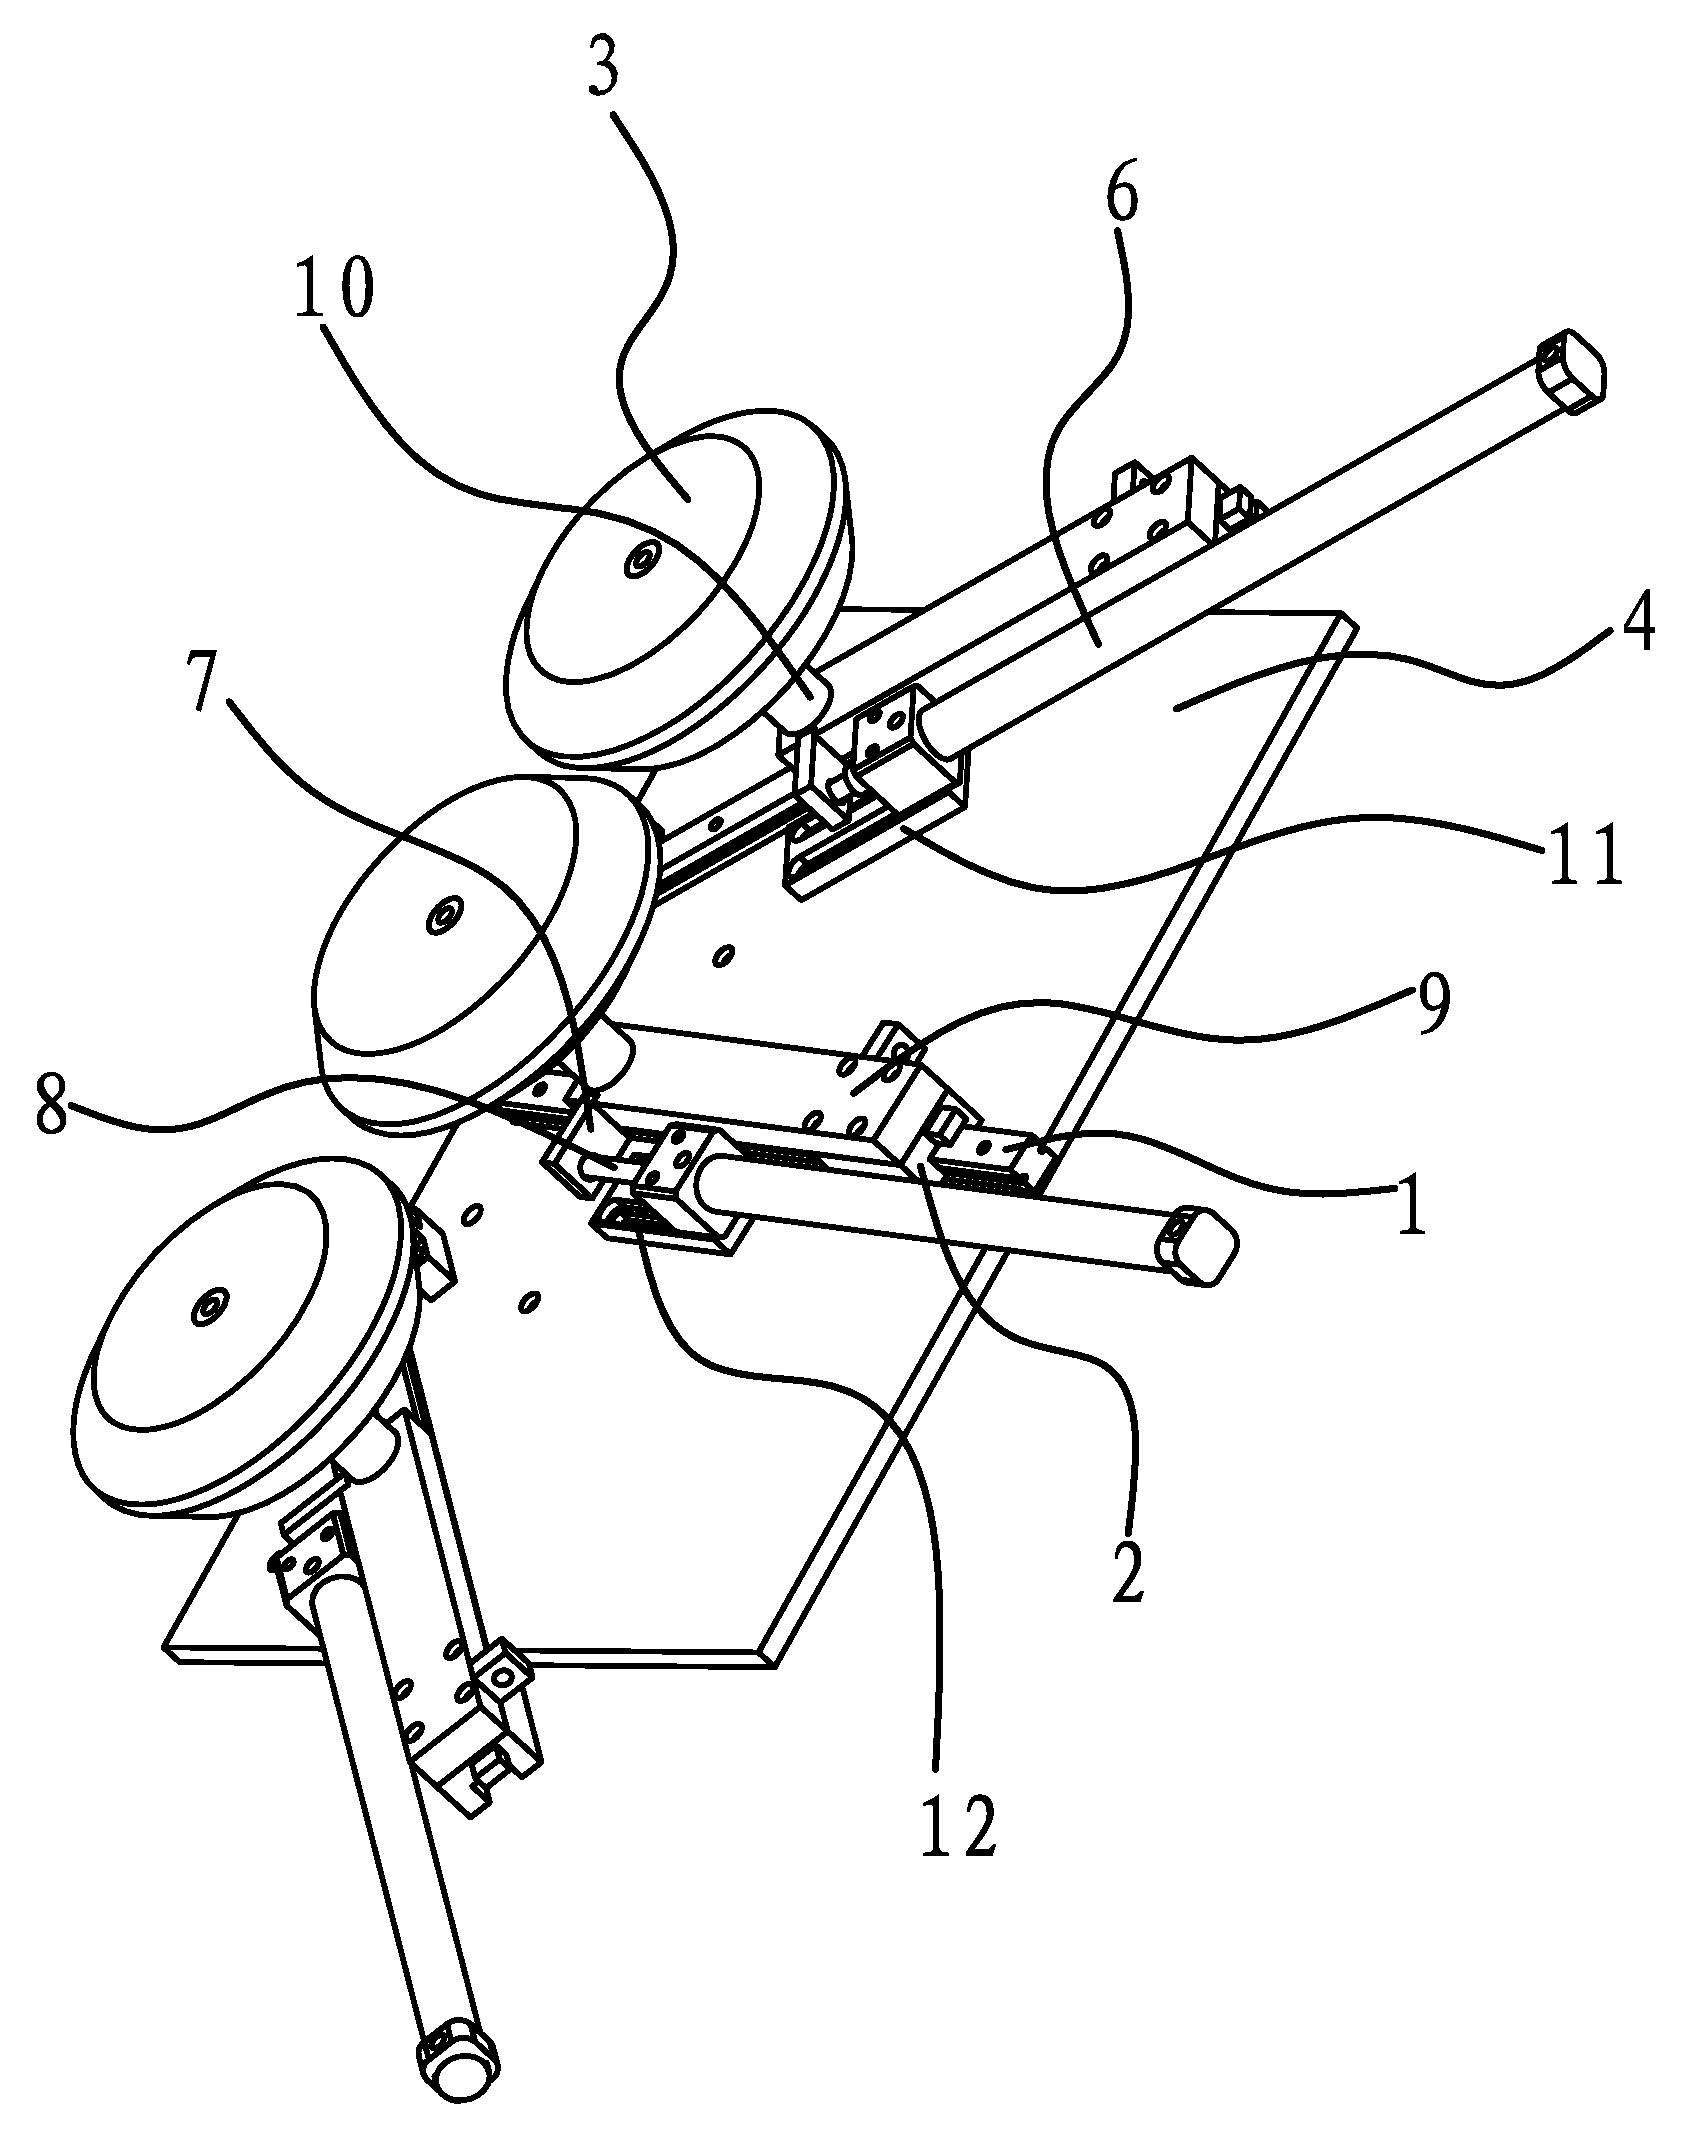 Transform mechanism of a finishing wheel for an abrasive belt polishing finisher